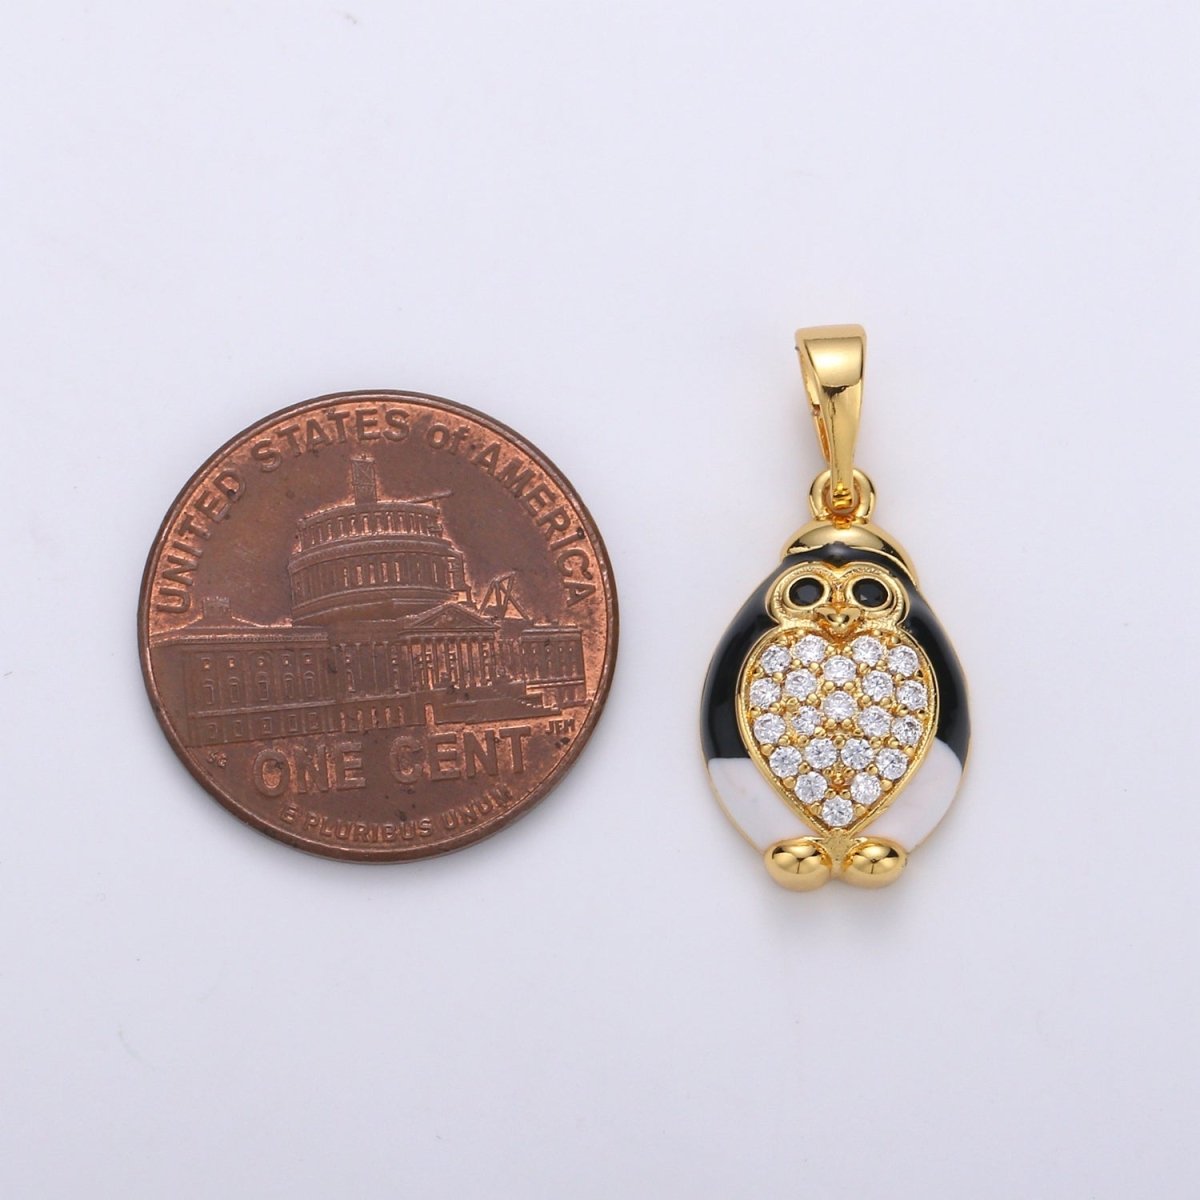 24K Gold Filled Penguin Charm Pendant Enamel Animal Charm Gold Penguin Pendant | Winter Wonderland Artic Snow Charm Jewelry J-074 - DLUXCA